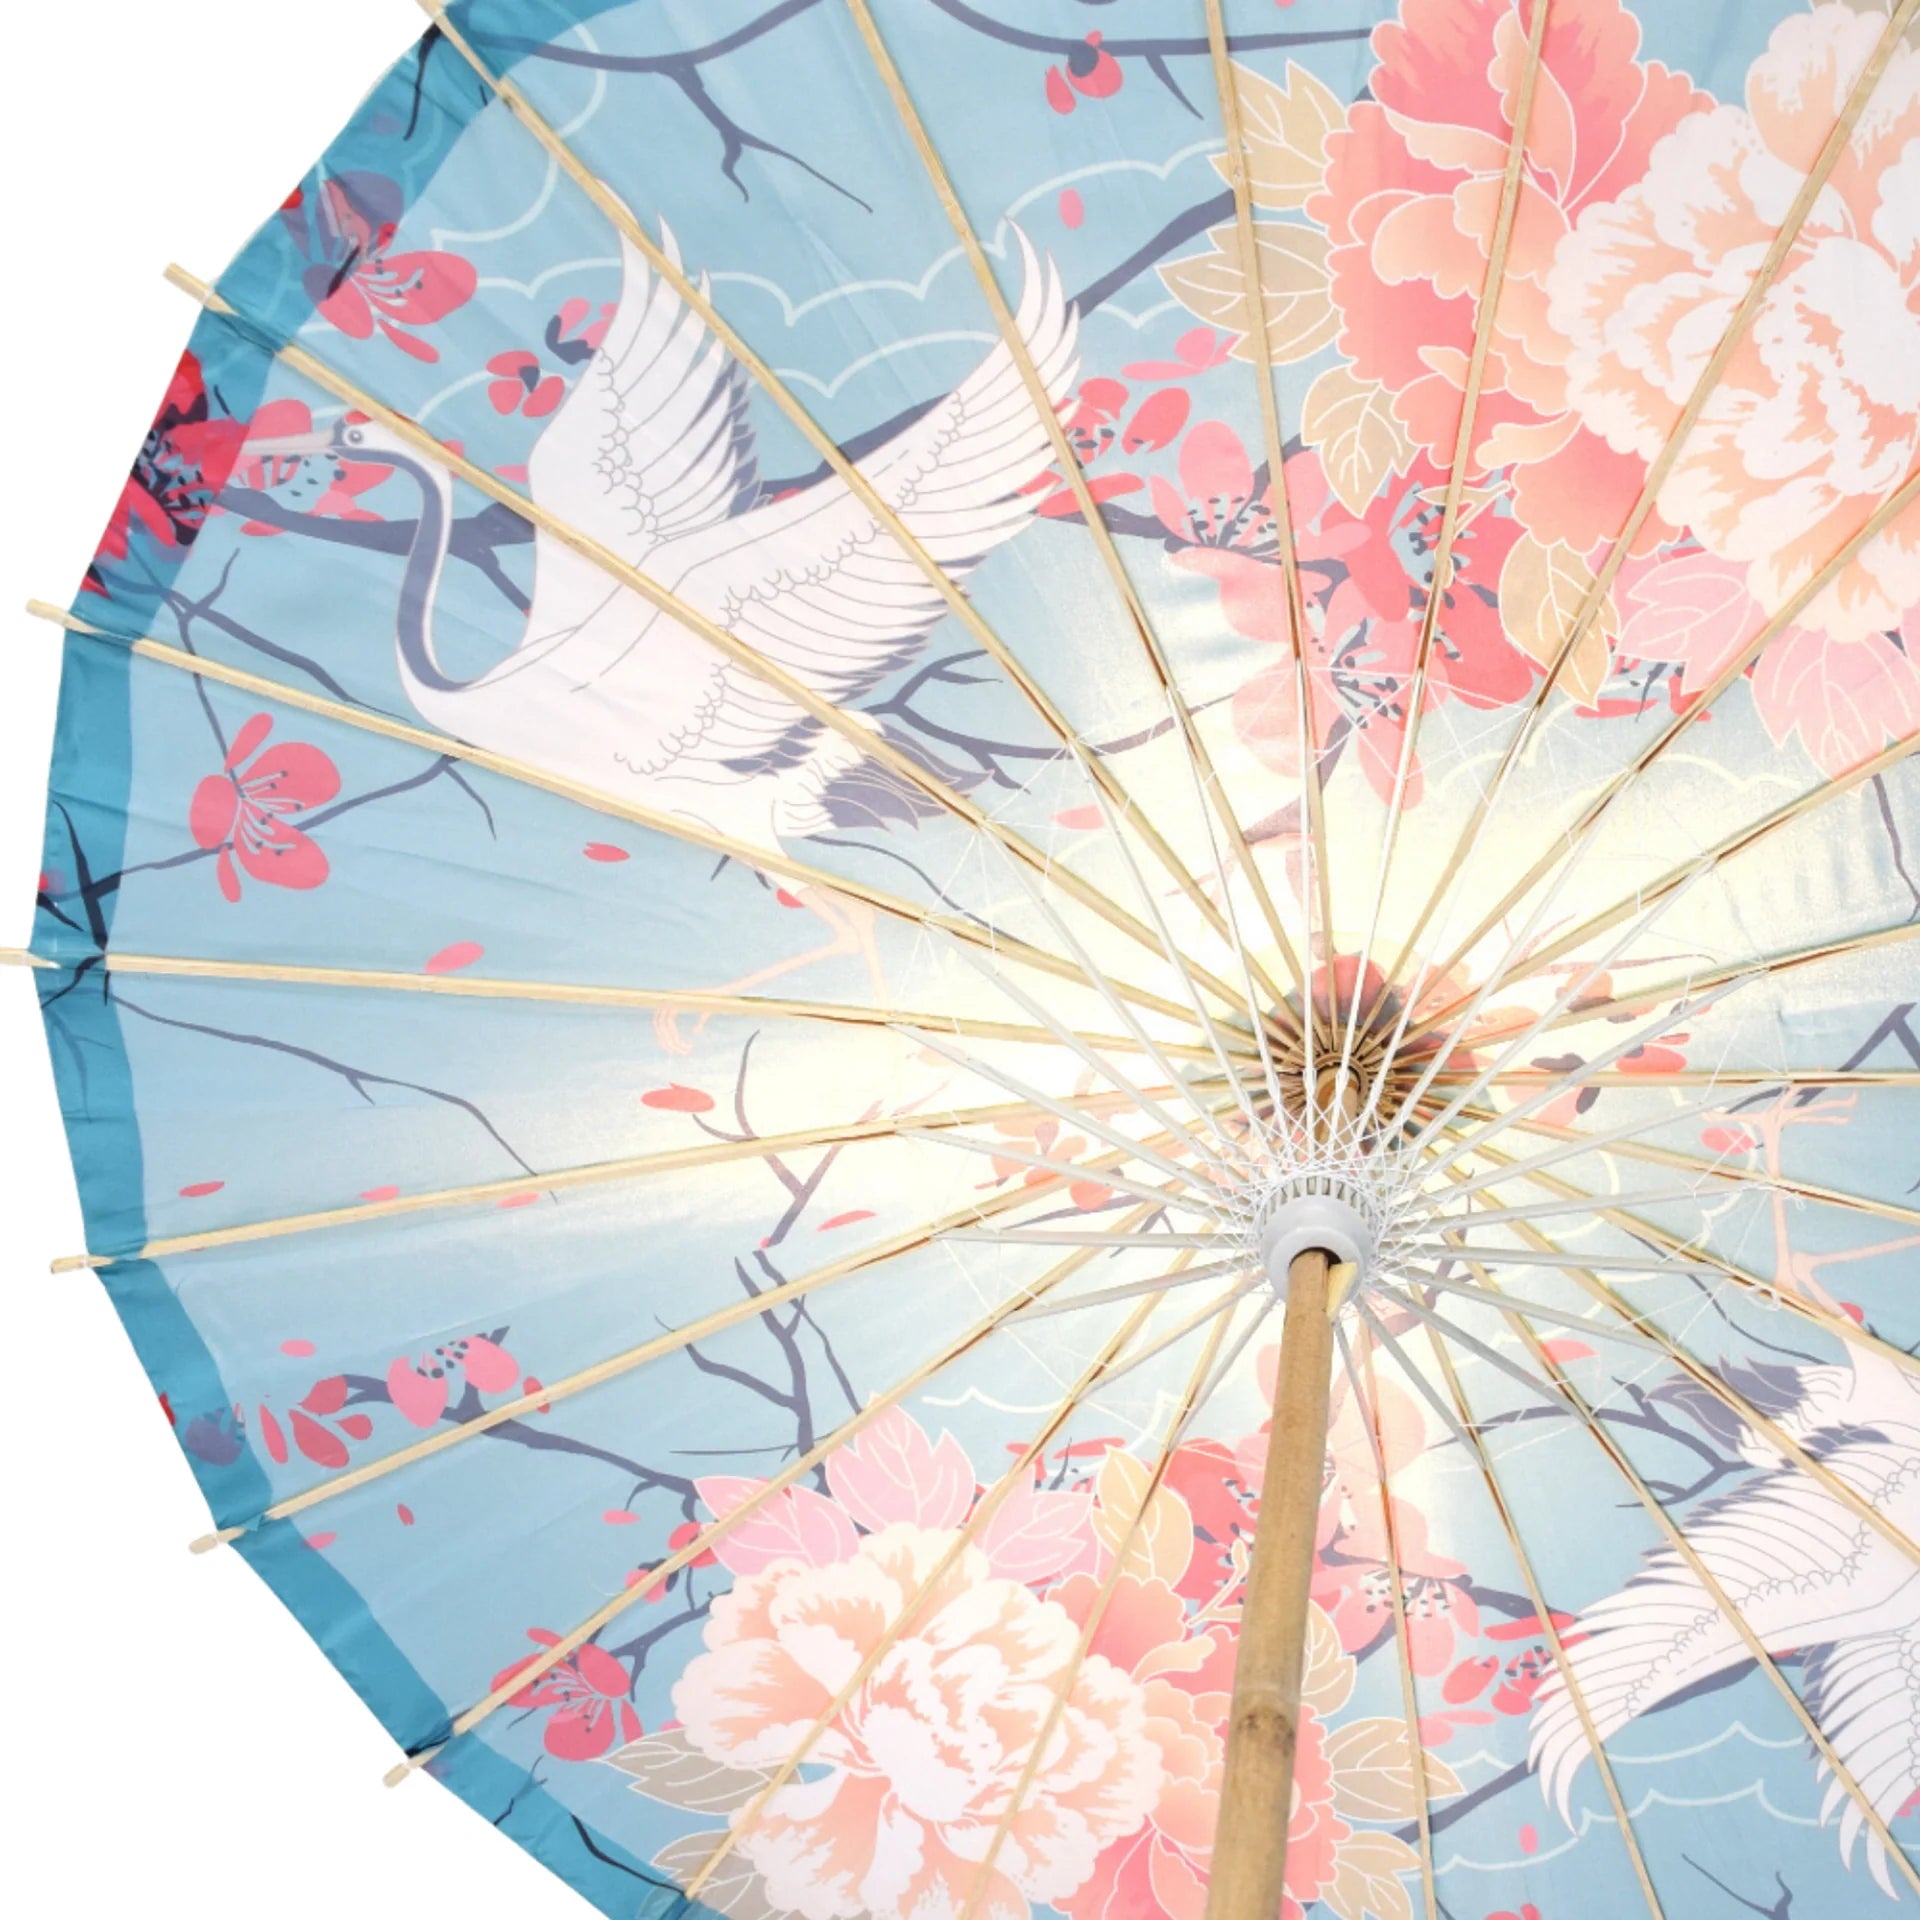 32" Crane and Cherry Blossom Premium Nylon Parasol Umbrella with Elegant Handle